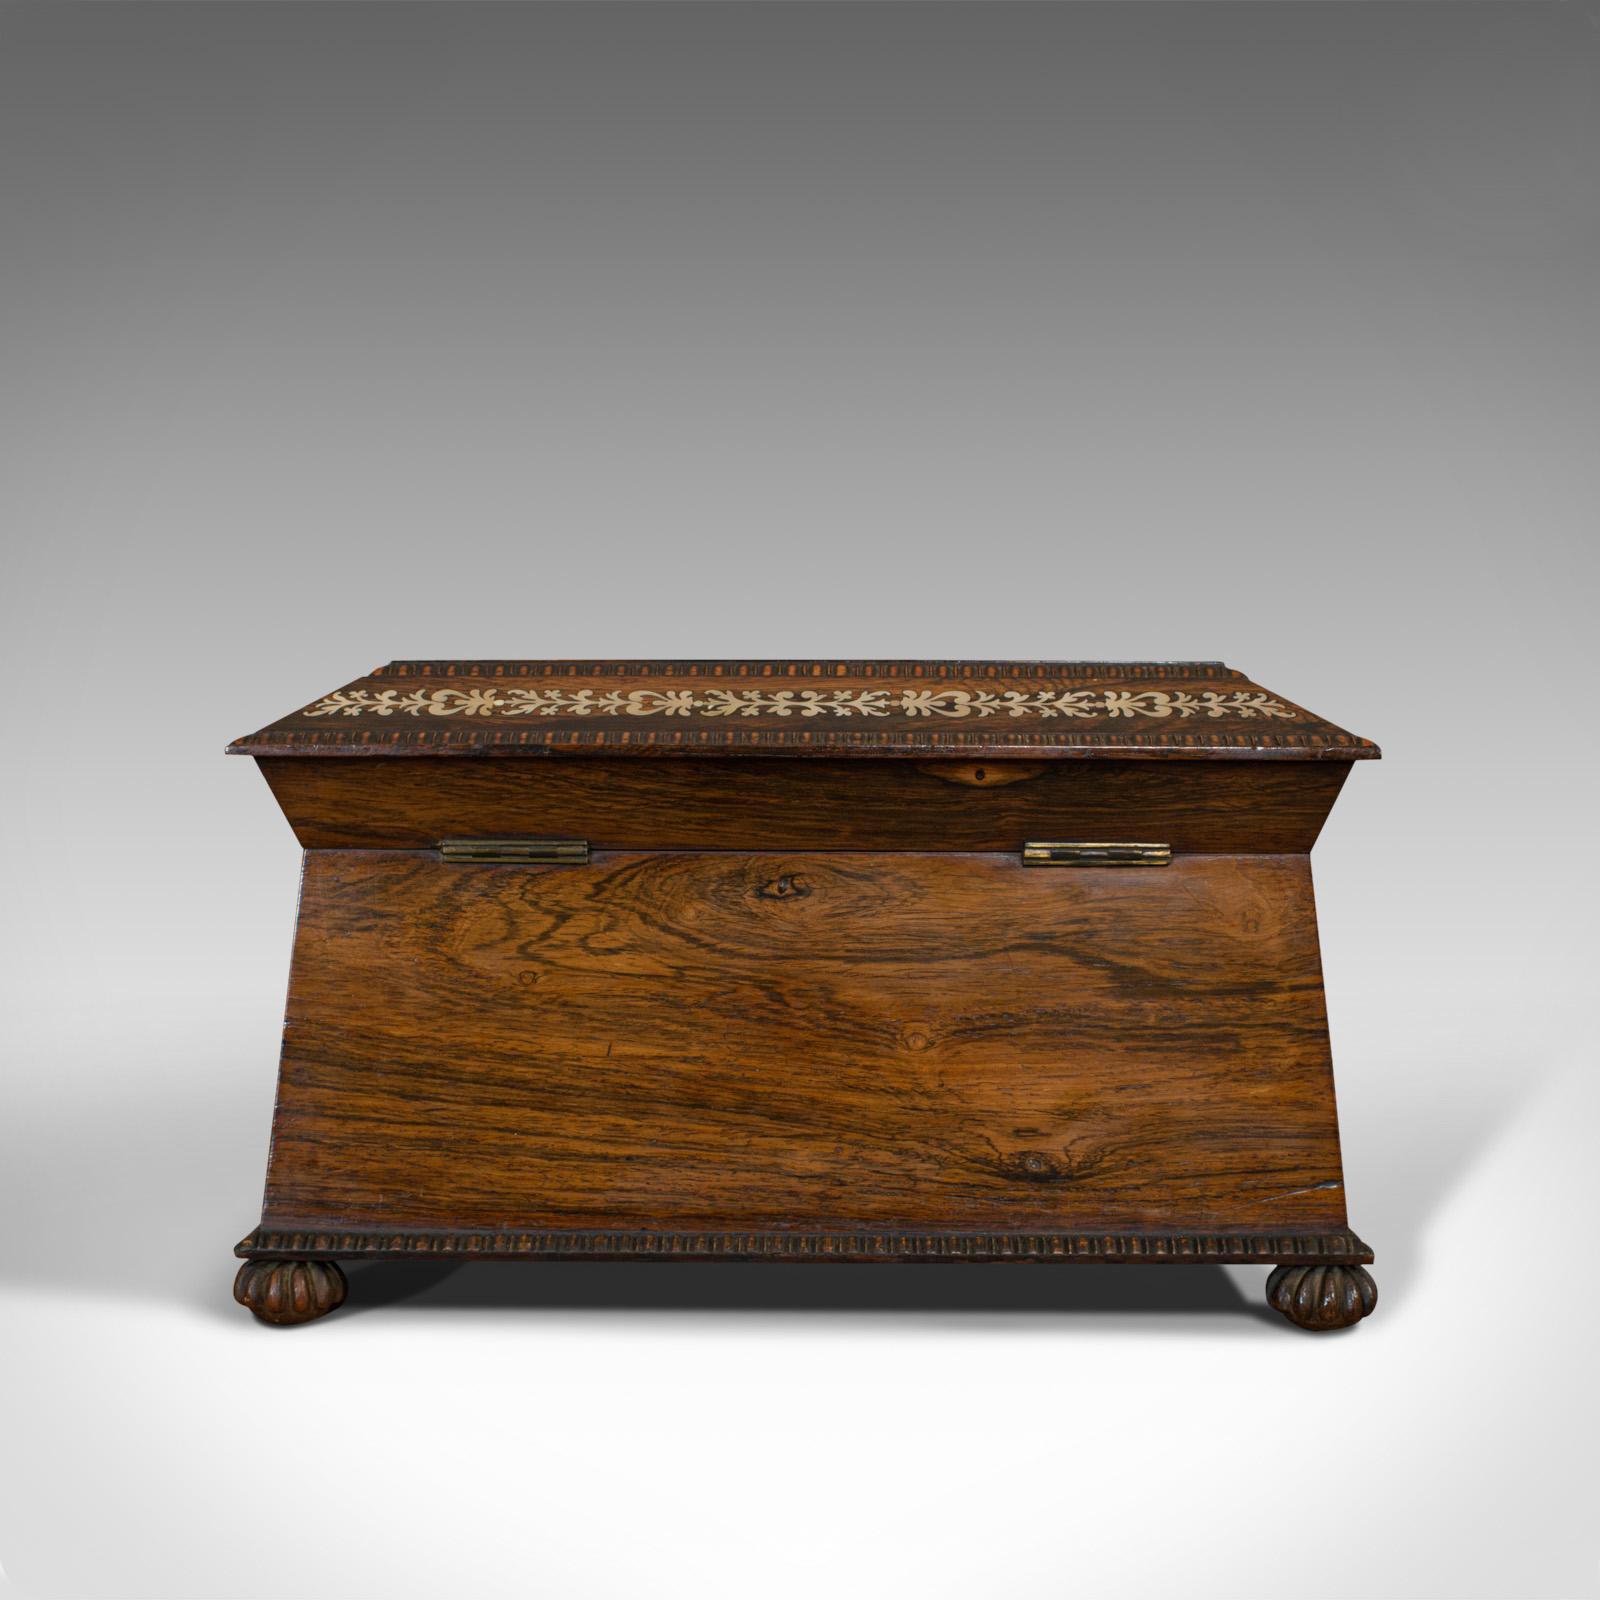 British Ornate Antique Tea Caddy, English, Rosewood, Sarcophagus, Chest, Regency